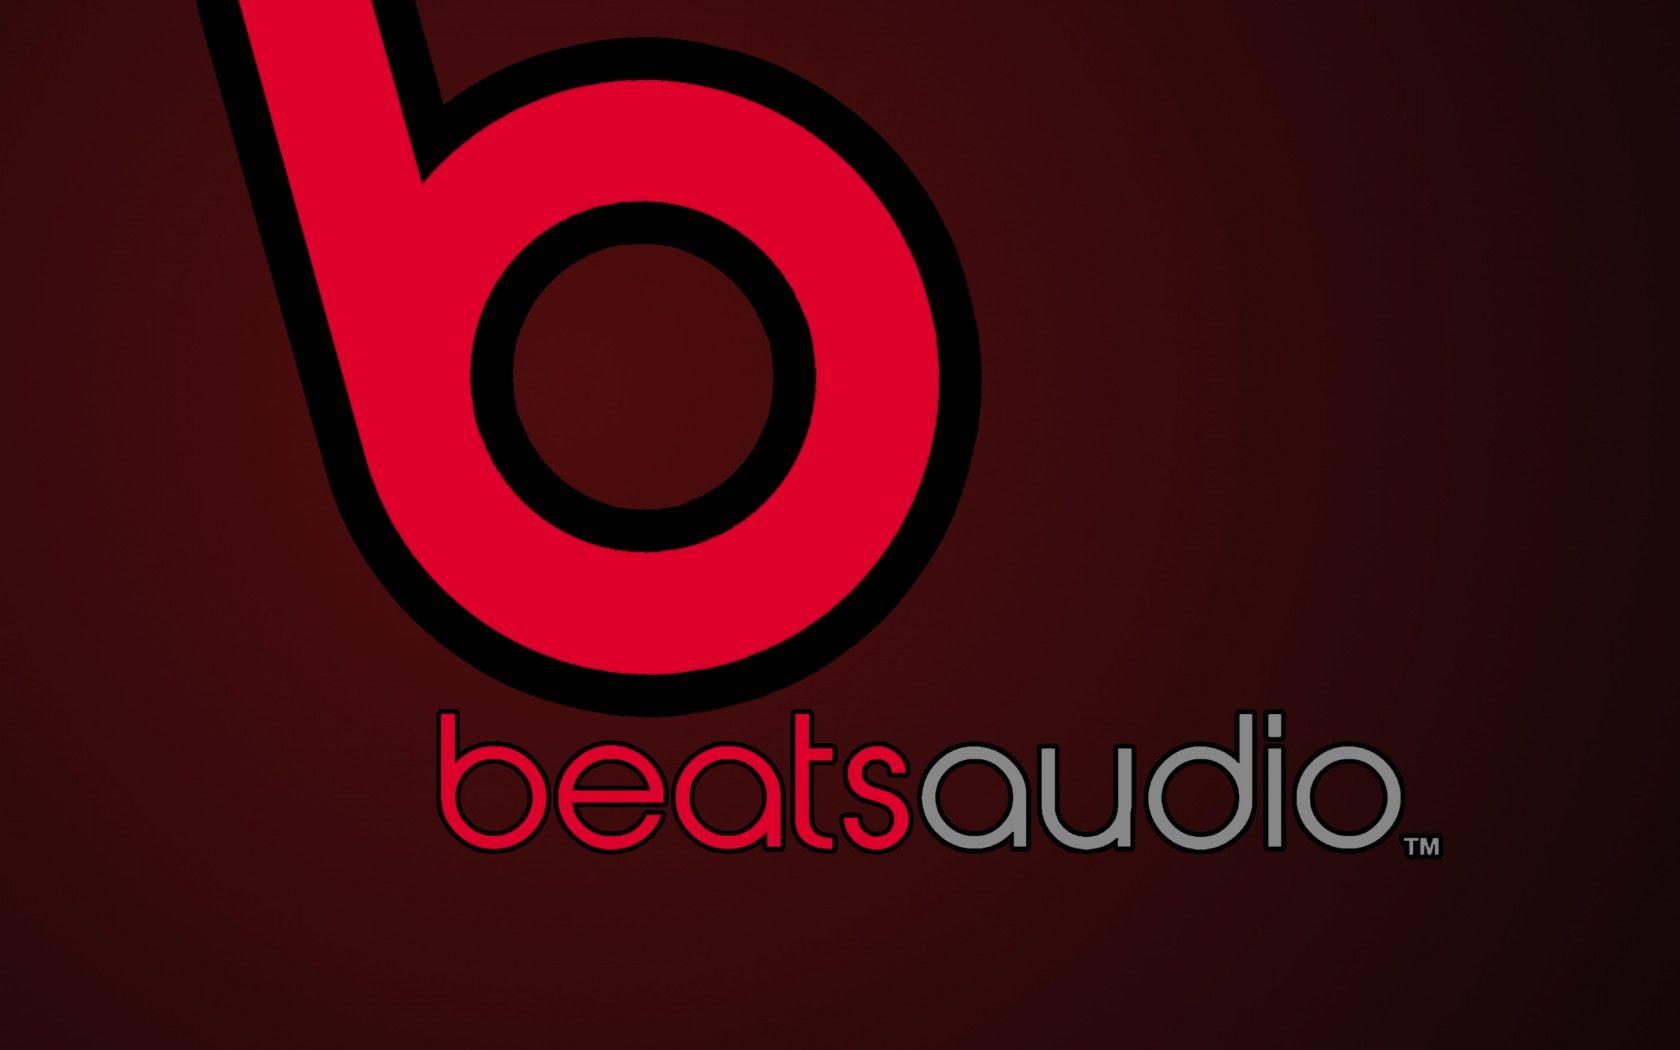 Beats Audio Logo - beats audio logo and music streaming service